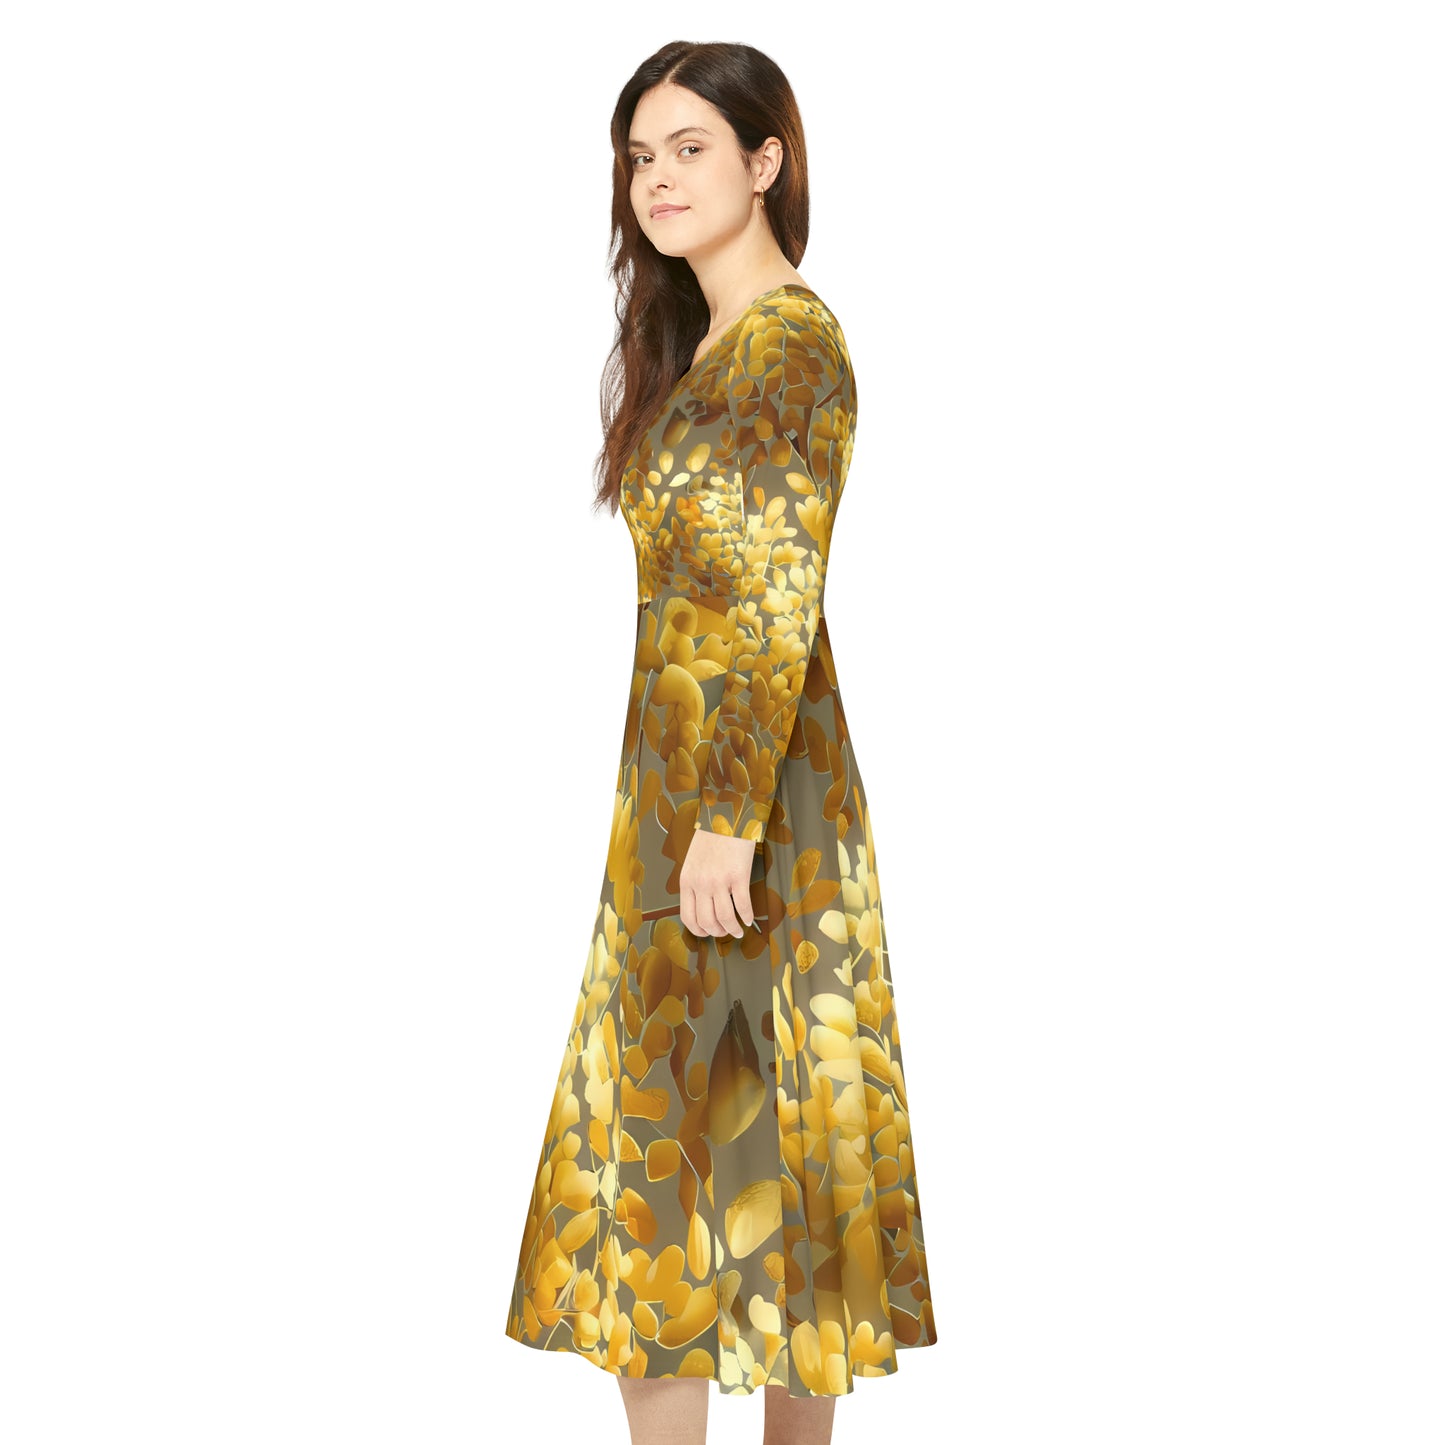 Fashion Women's Long Sleeve Dance Dress - Absolute Greatest Golden Floral Dance Dress for Summer